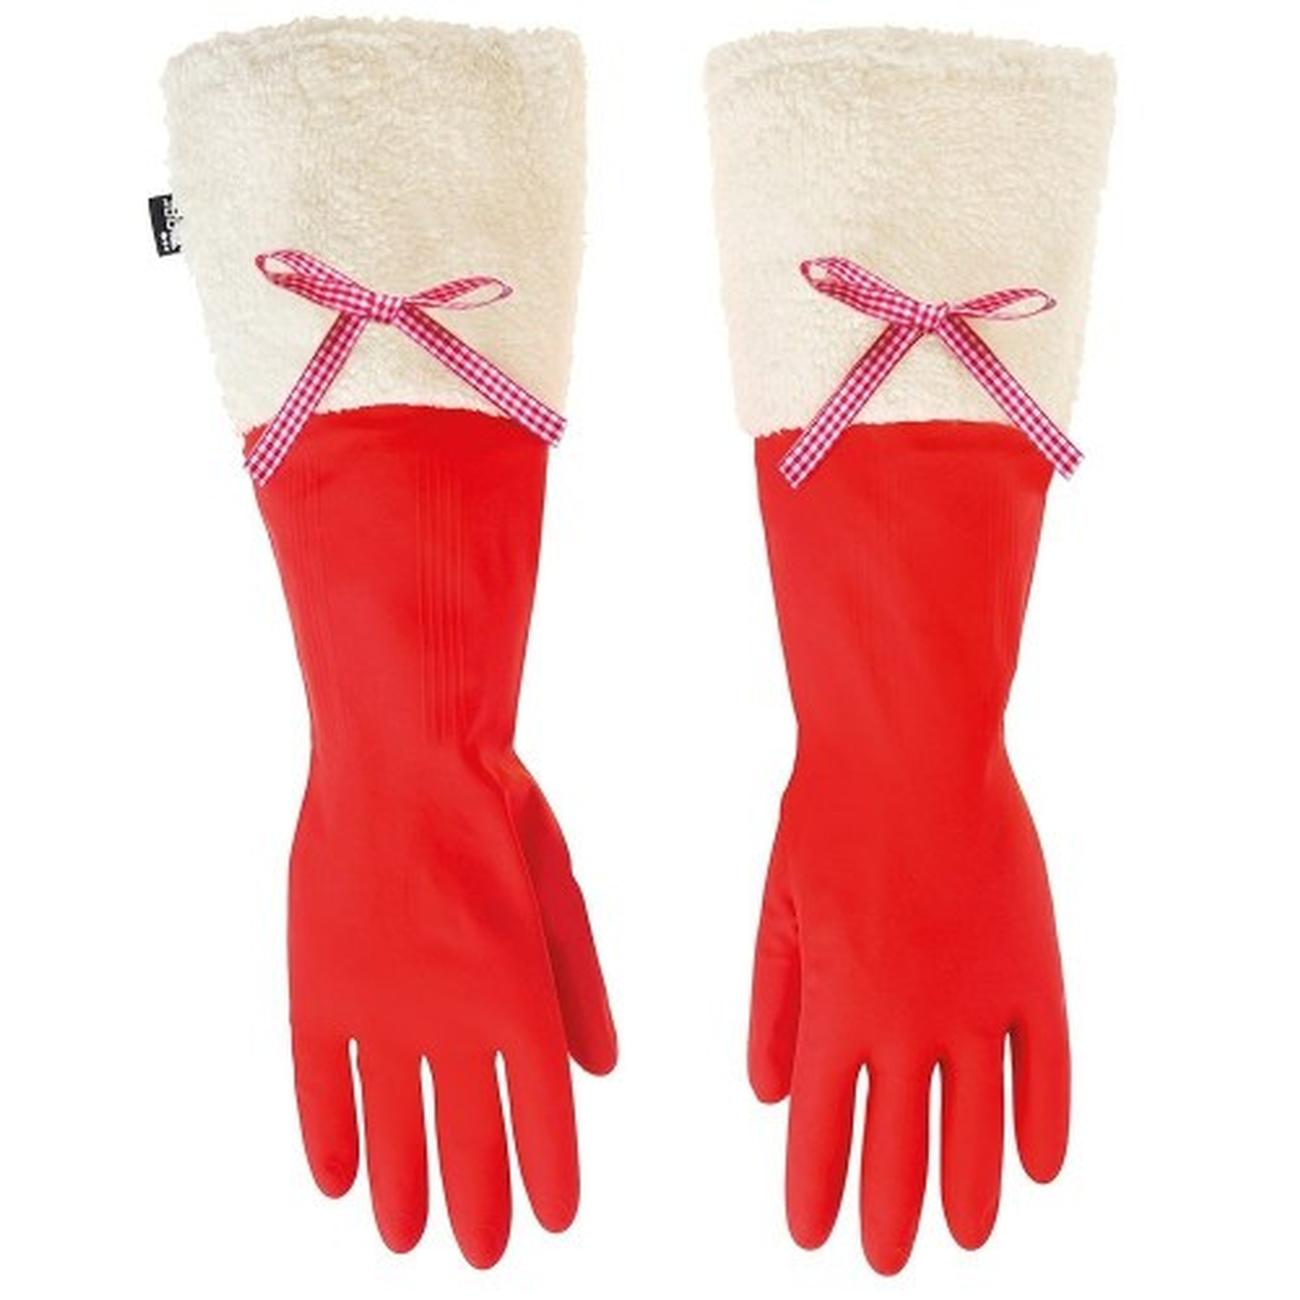 vigar-cuffed-christmas-gloves - Vigar Cuffed Christmas Washing Up Gloves.